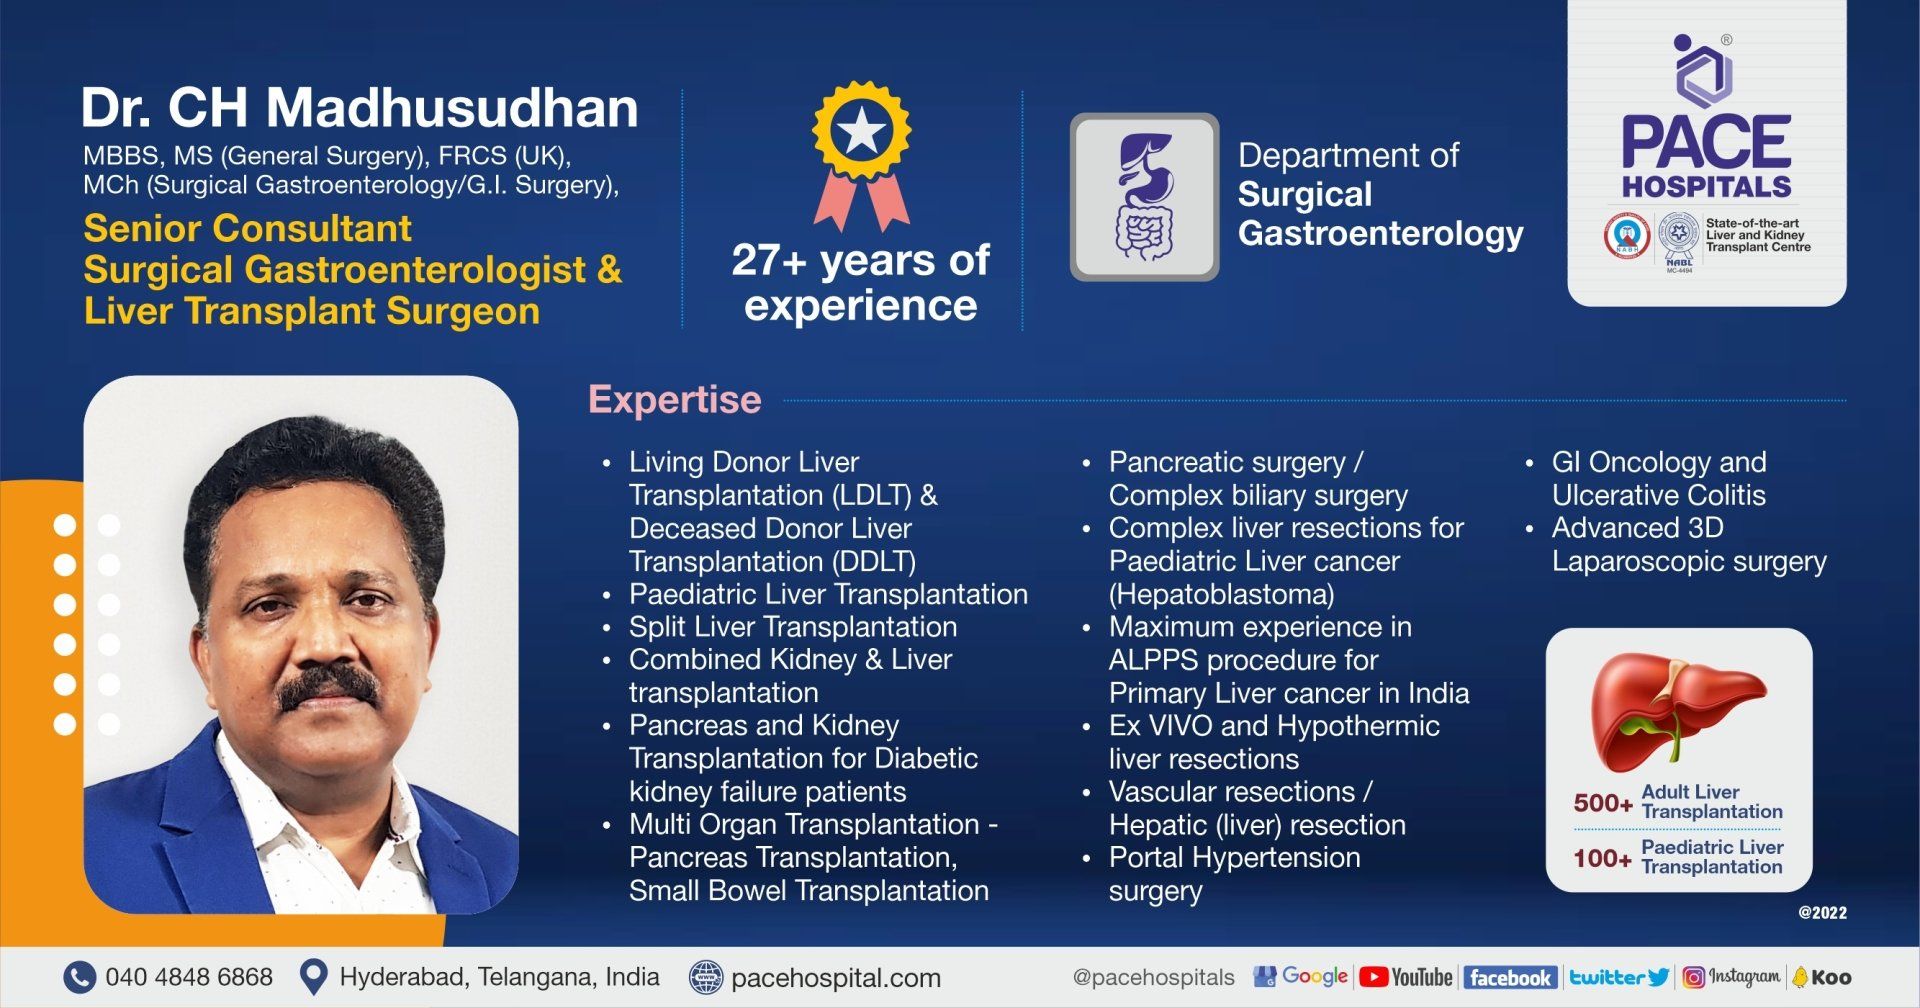 Dr Ch Madhusudhan Best Liver Transplant Surgeon Sge In Hyderabad